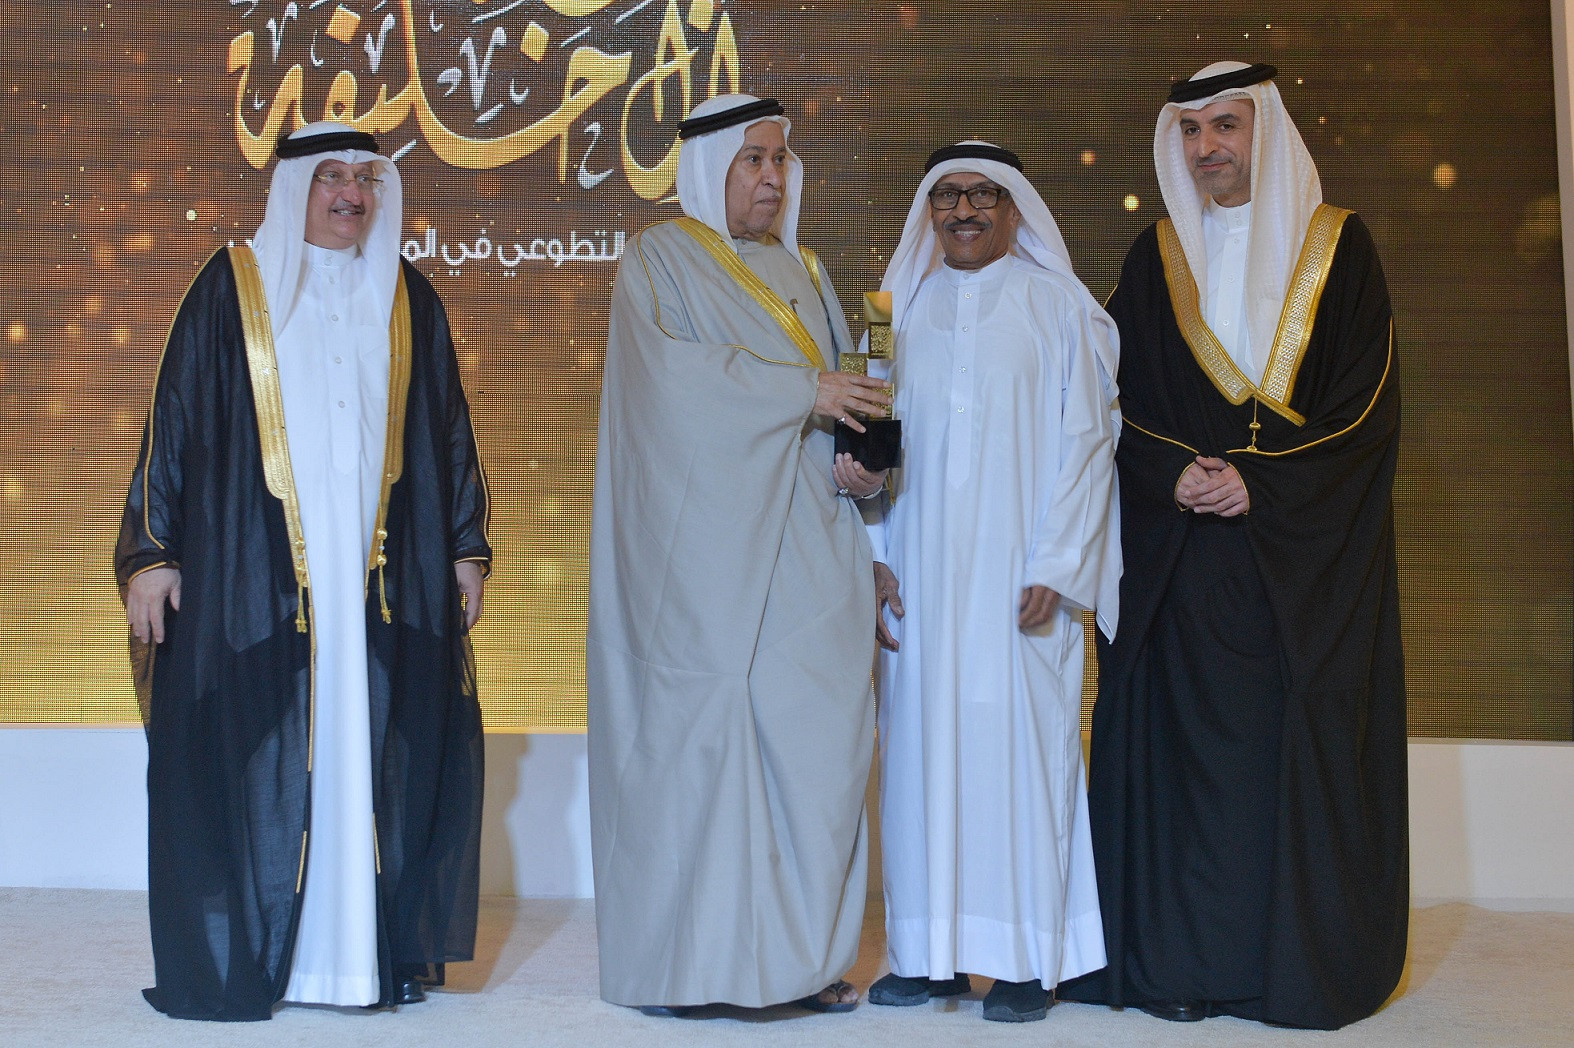 Bahrain Olympic Committee President congratulates winners of voluntary work award